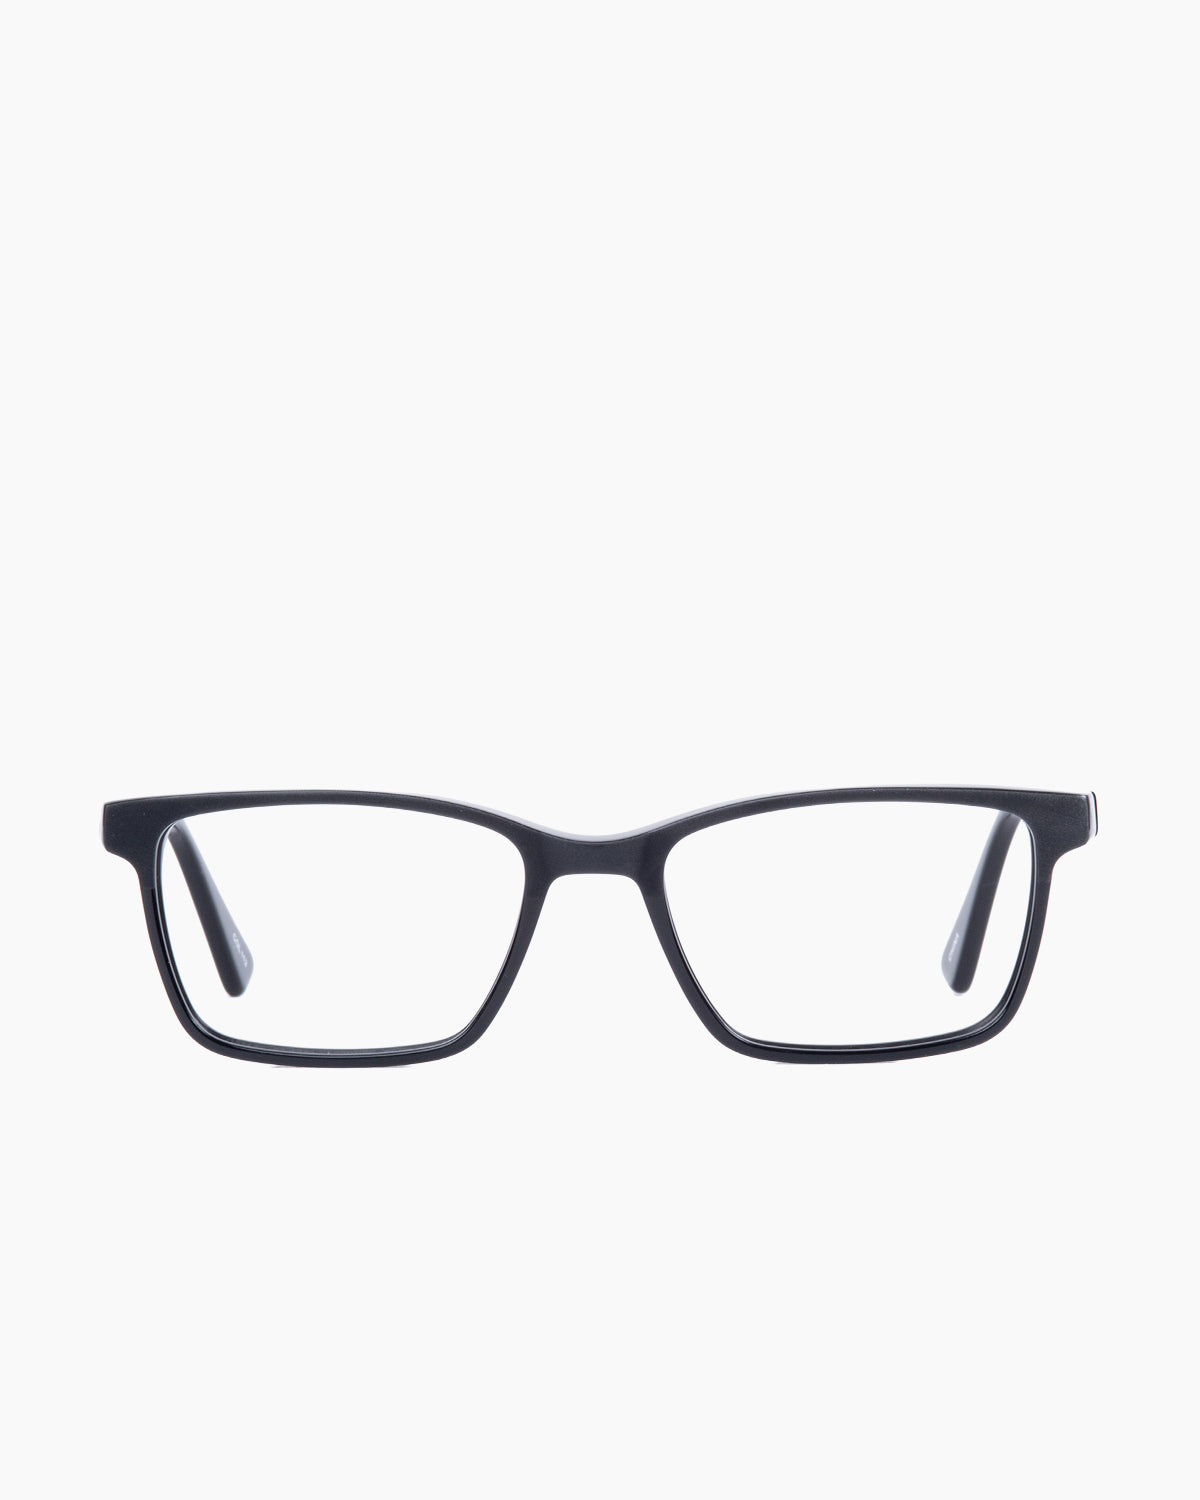 Evolve - Garfield - 112 | Bar à lunettes:  Marie-Sophie Dion